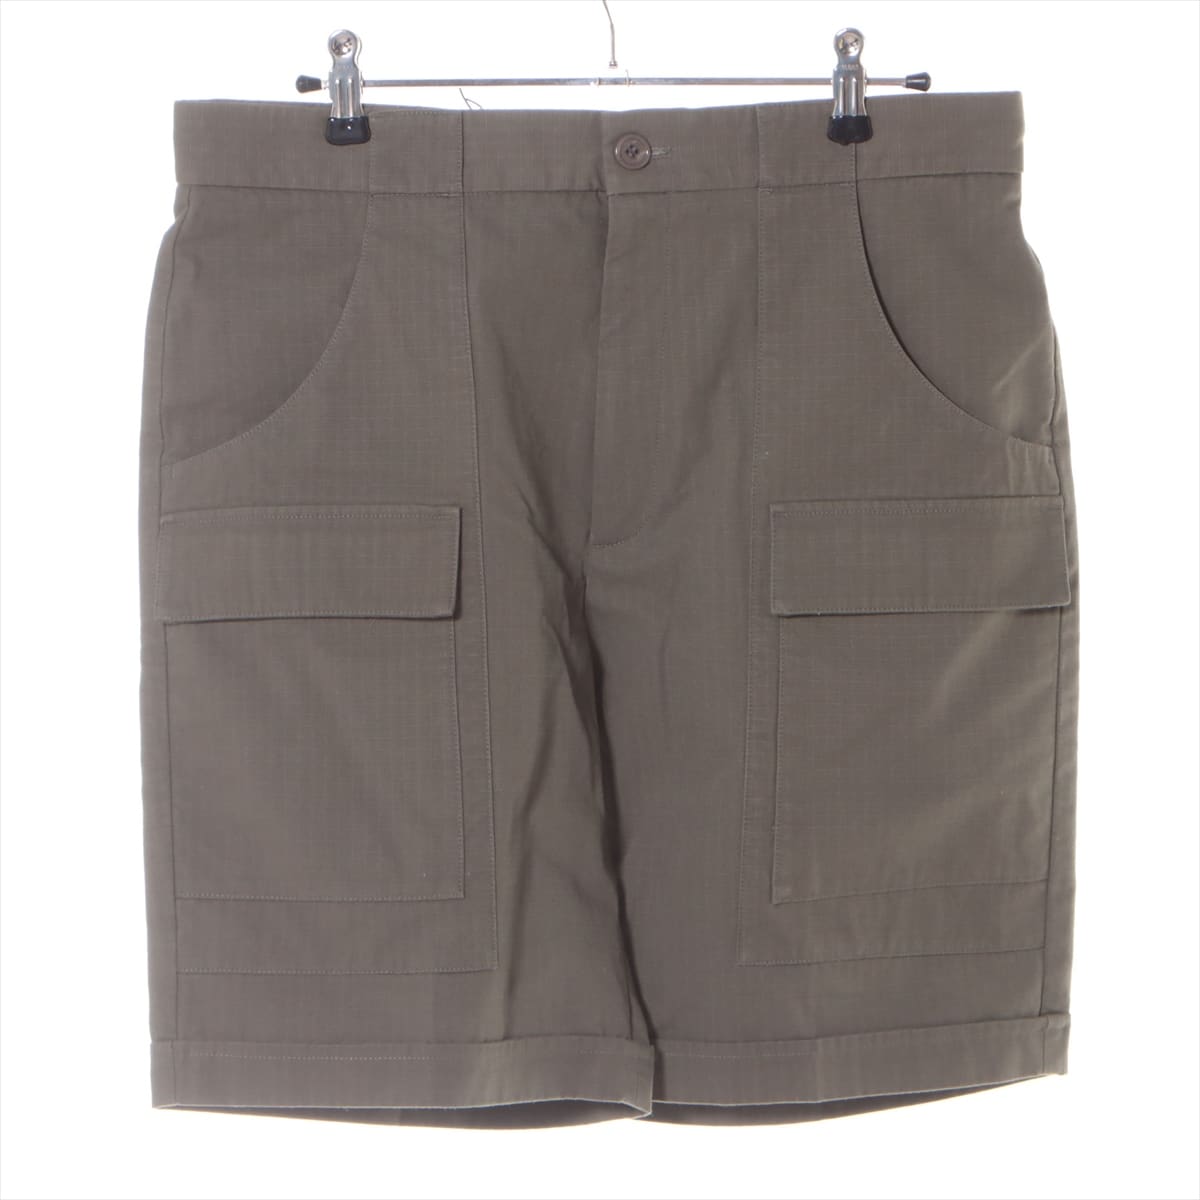 Gucci x North Face Cotton & nylon Short pants 46 Men's Khaki  643129 Cargo pants